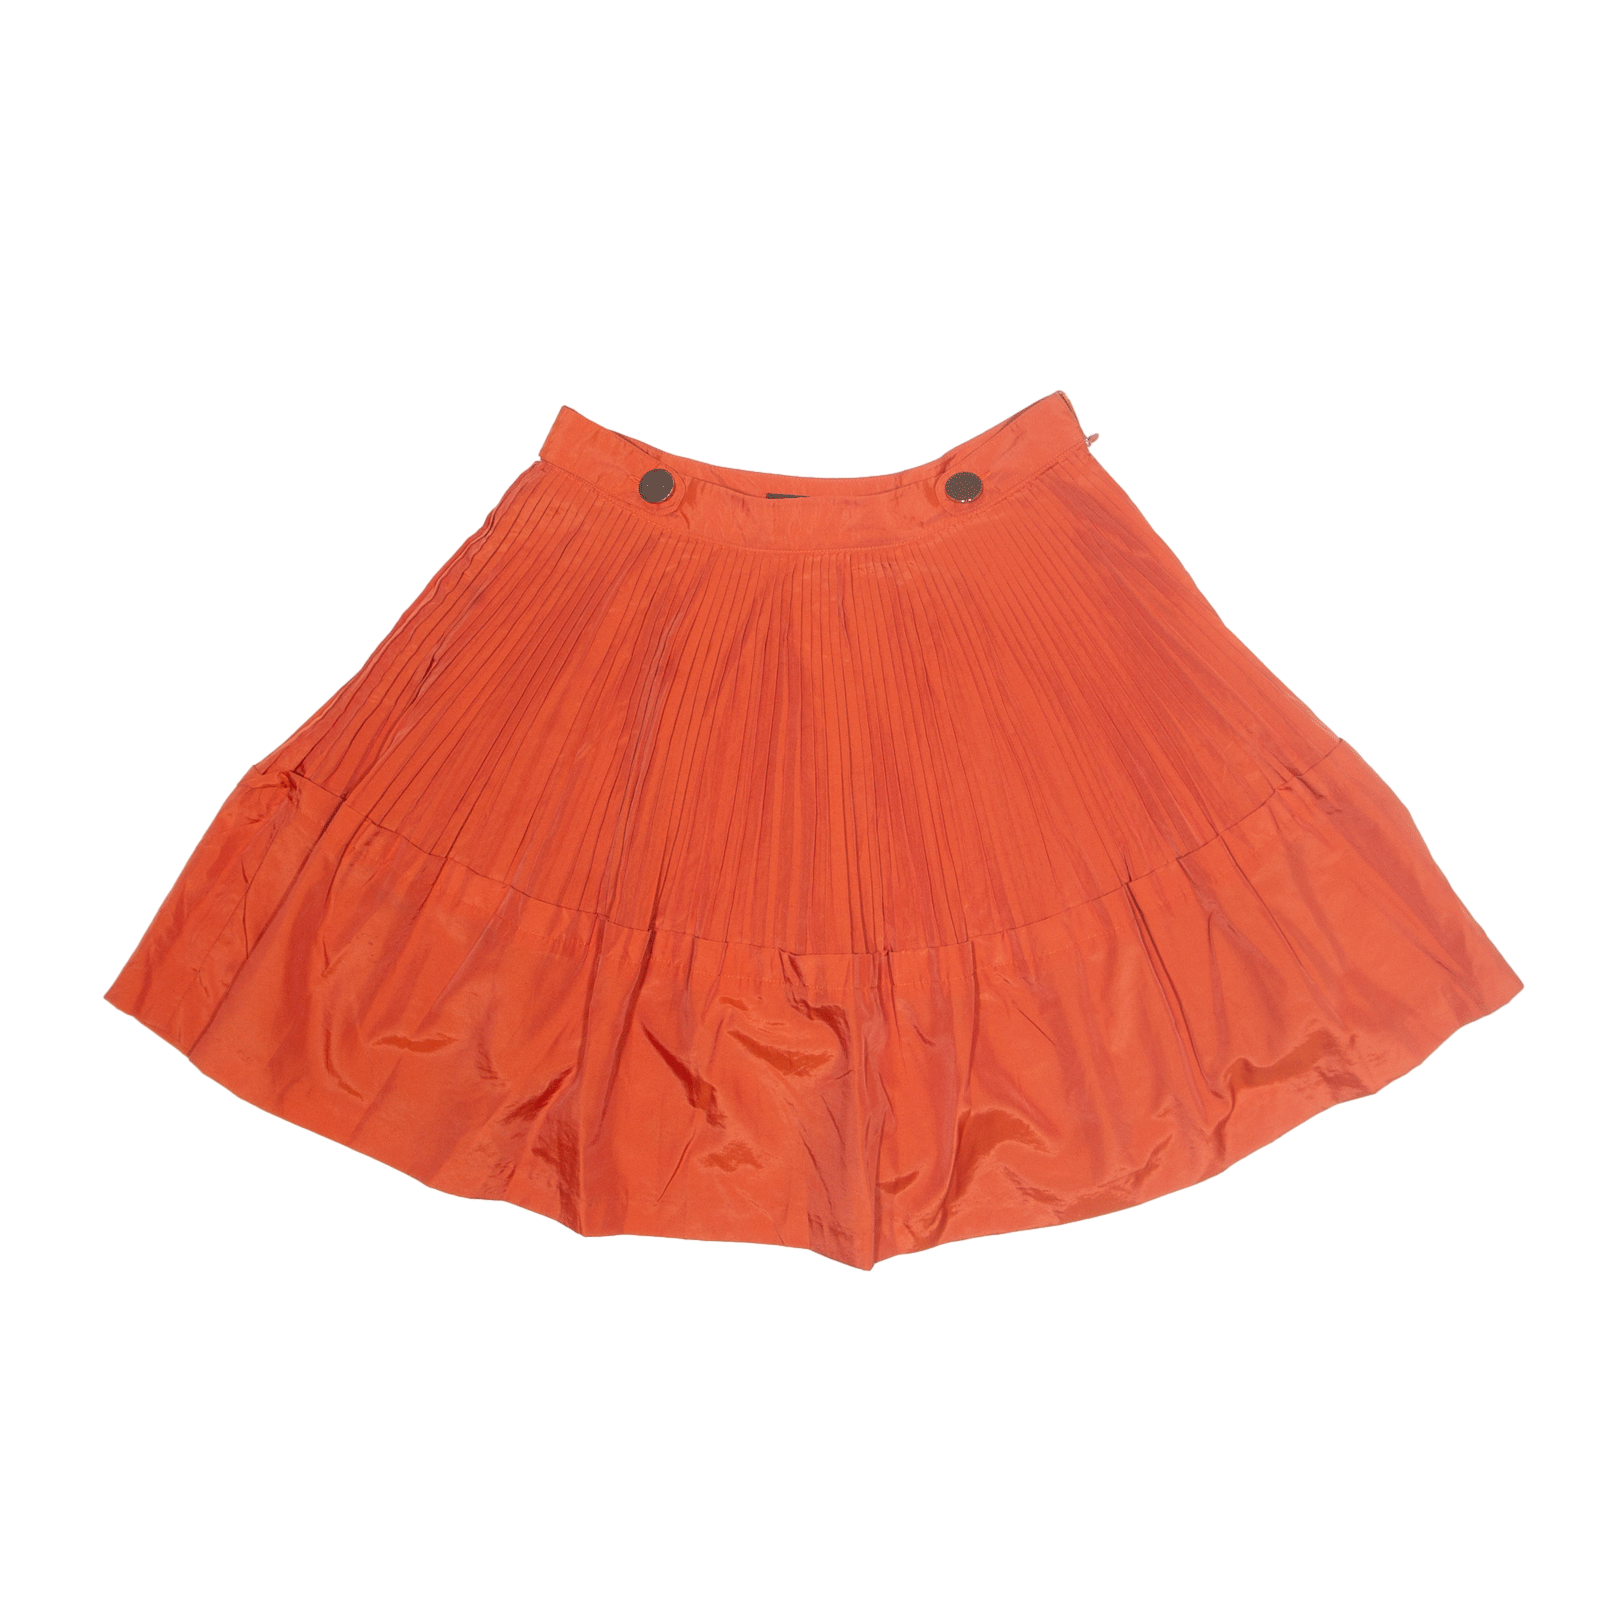 Plaid grey/lavender and orange pleated skirt Bought... - Depop